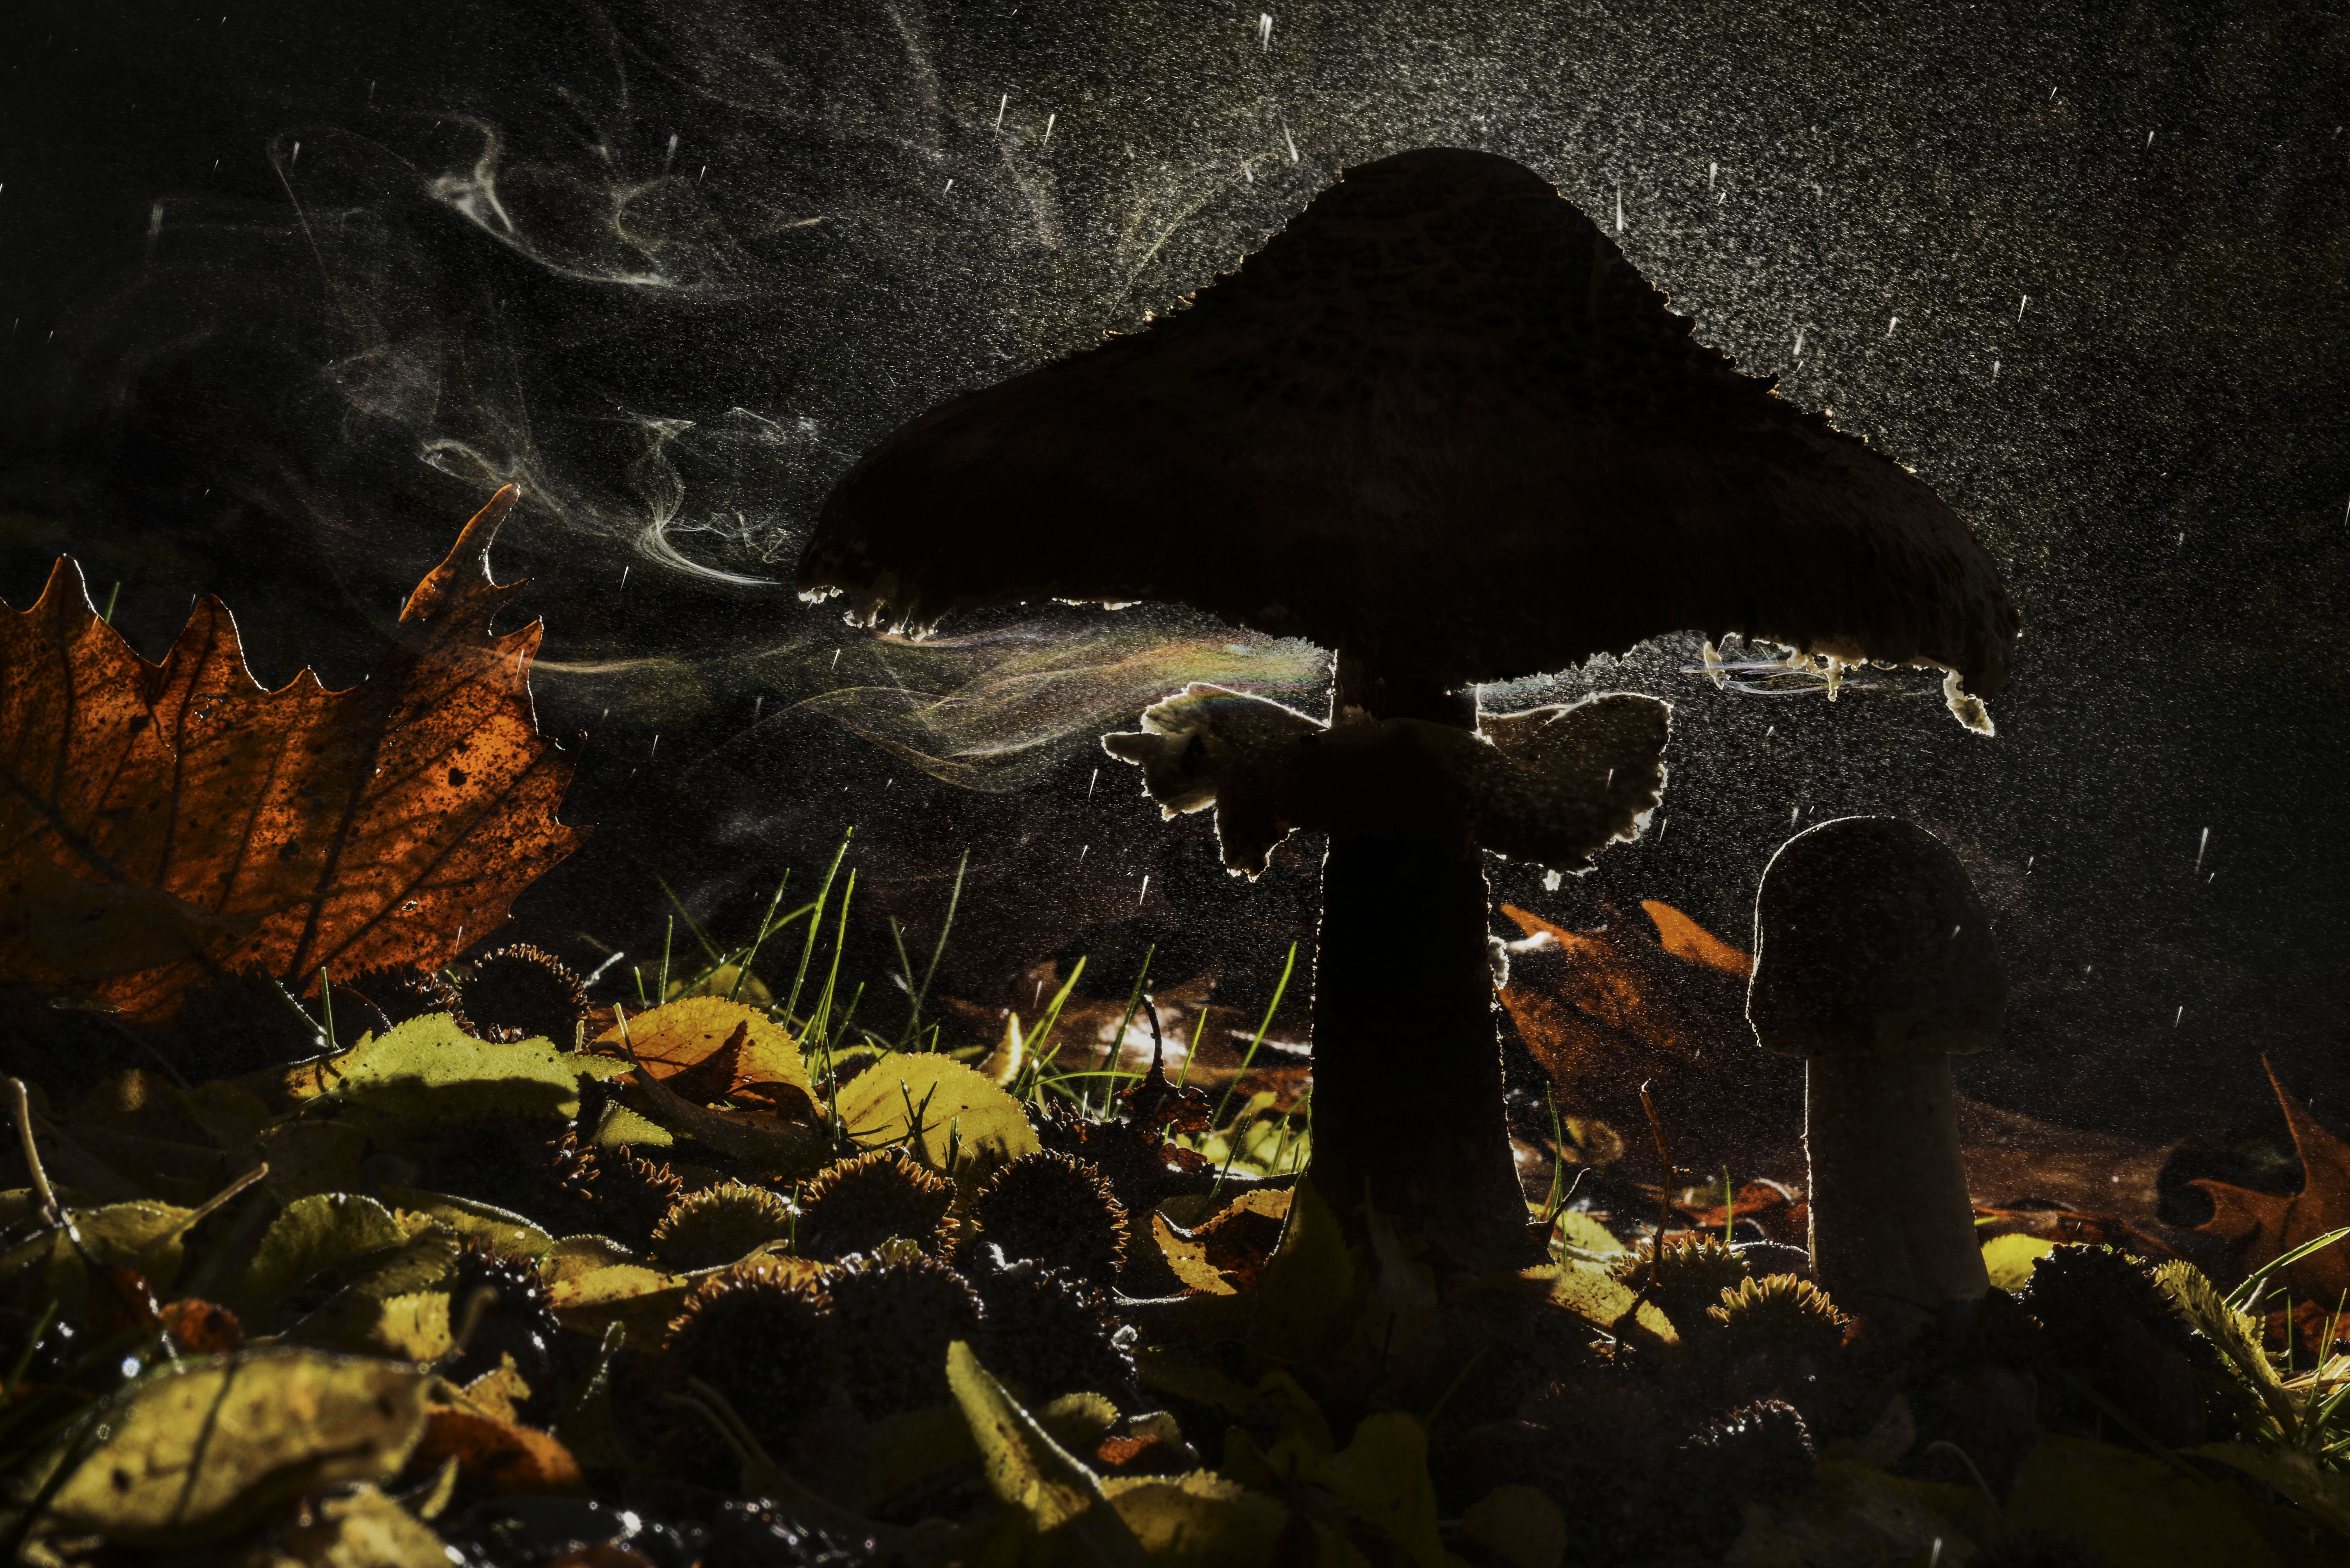 Parasol mushroom spreading spores